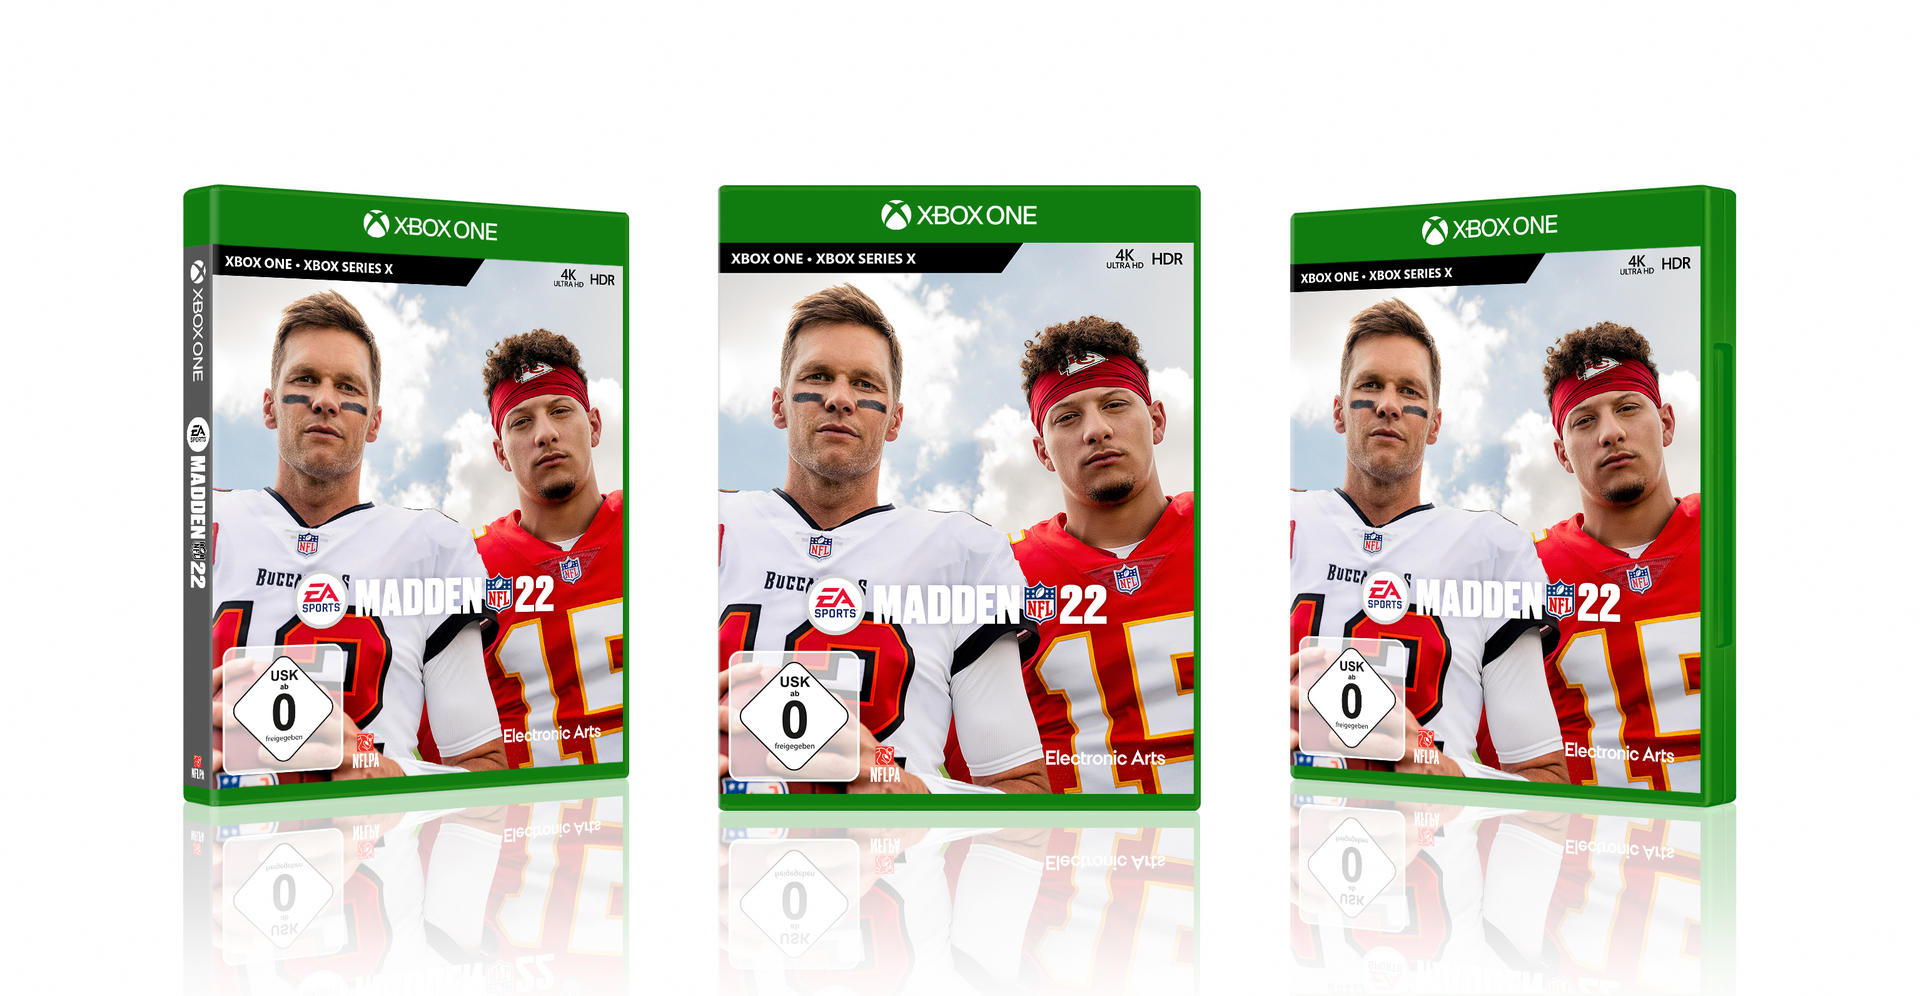 22 Madden - [Xbox One] NFL